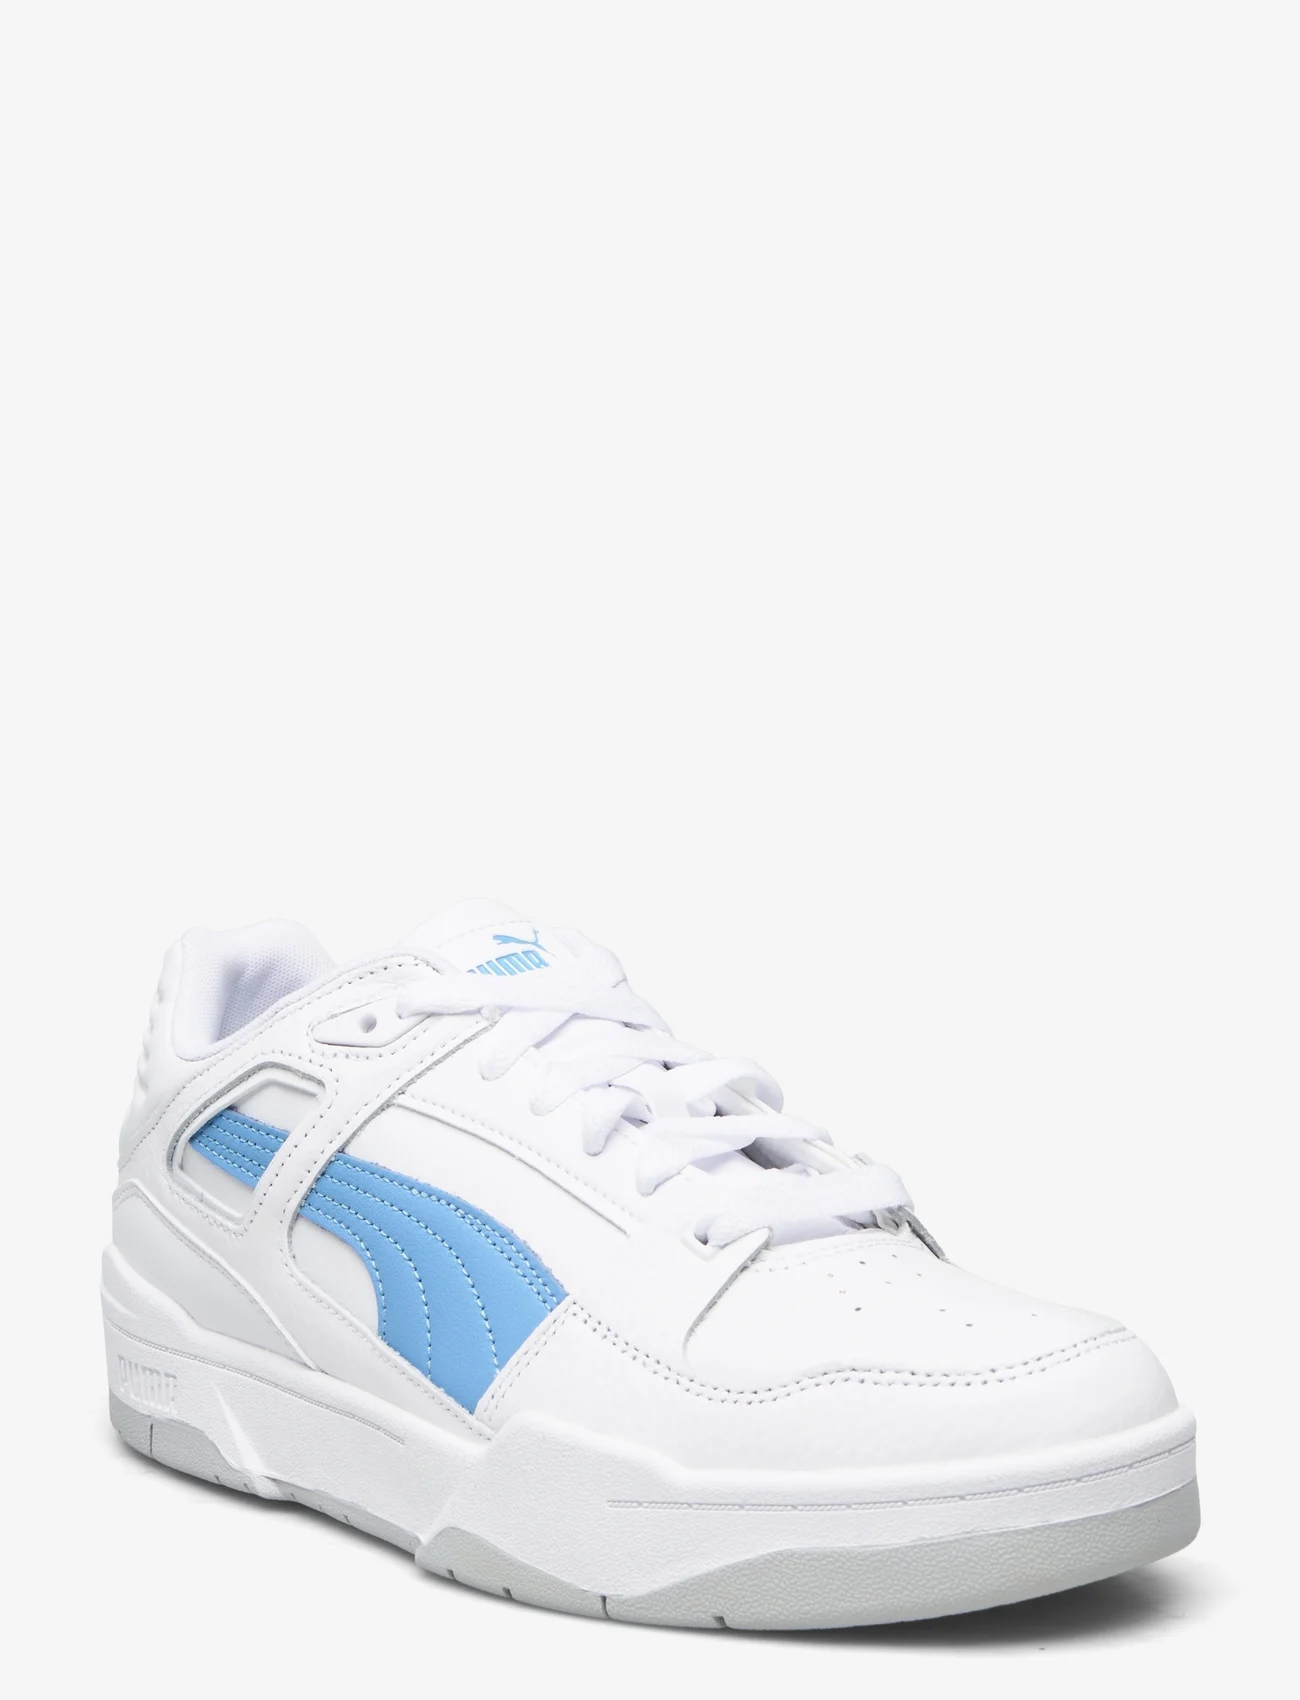 PUMA - Slipstream lth - low top sneakers - puma white-team light blue - 0